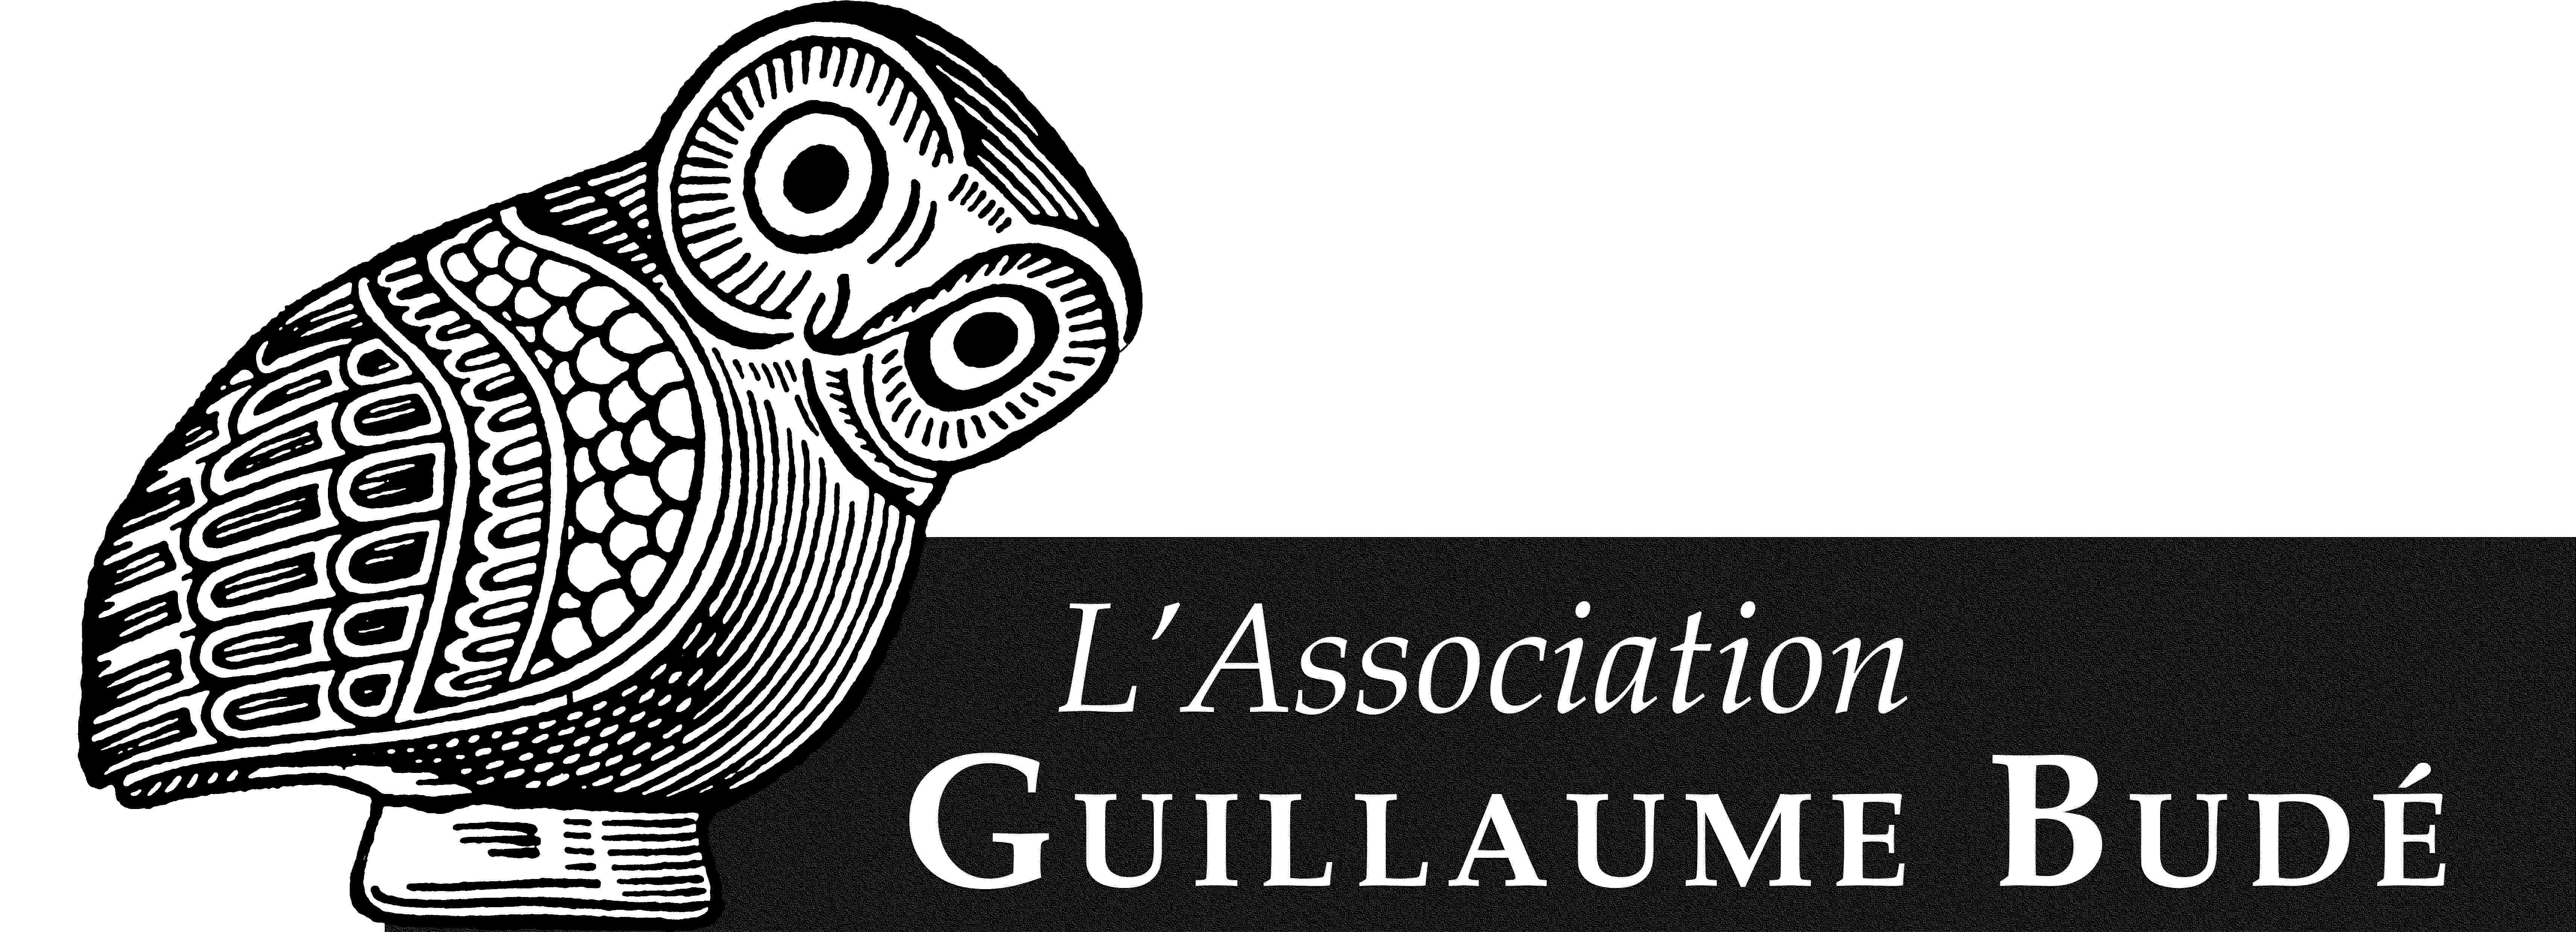 Logo Association Guillaume Bude769 